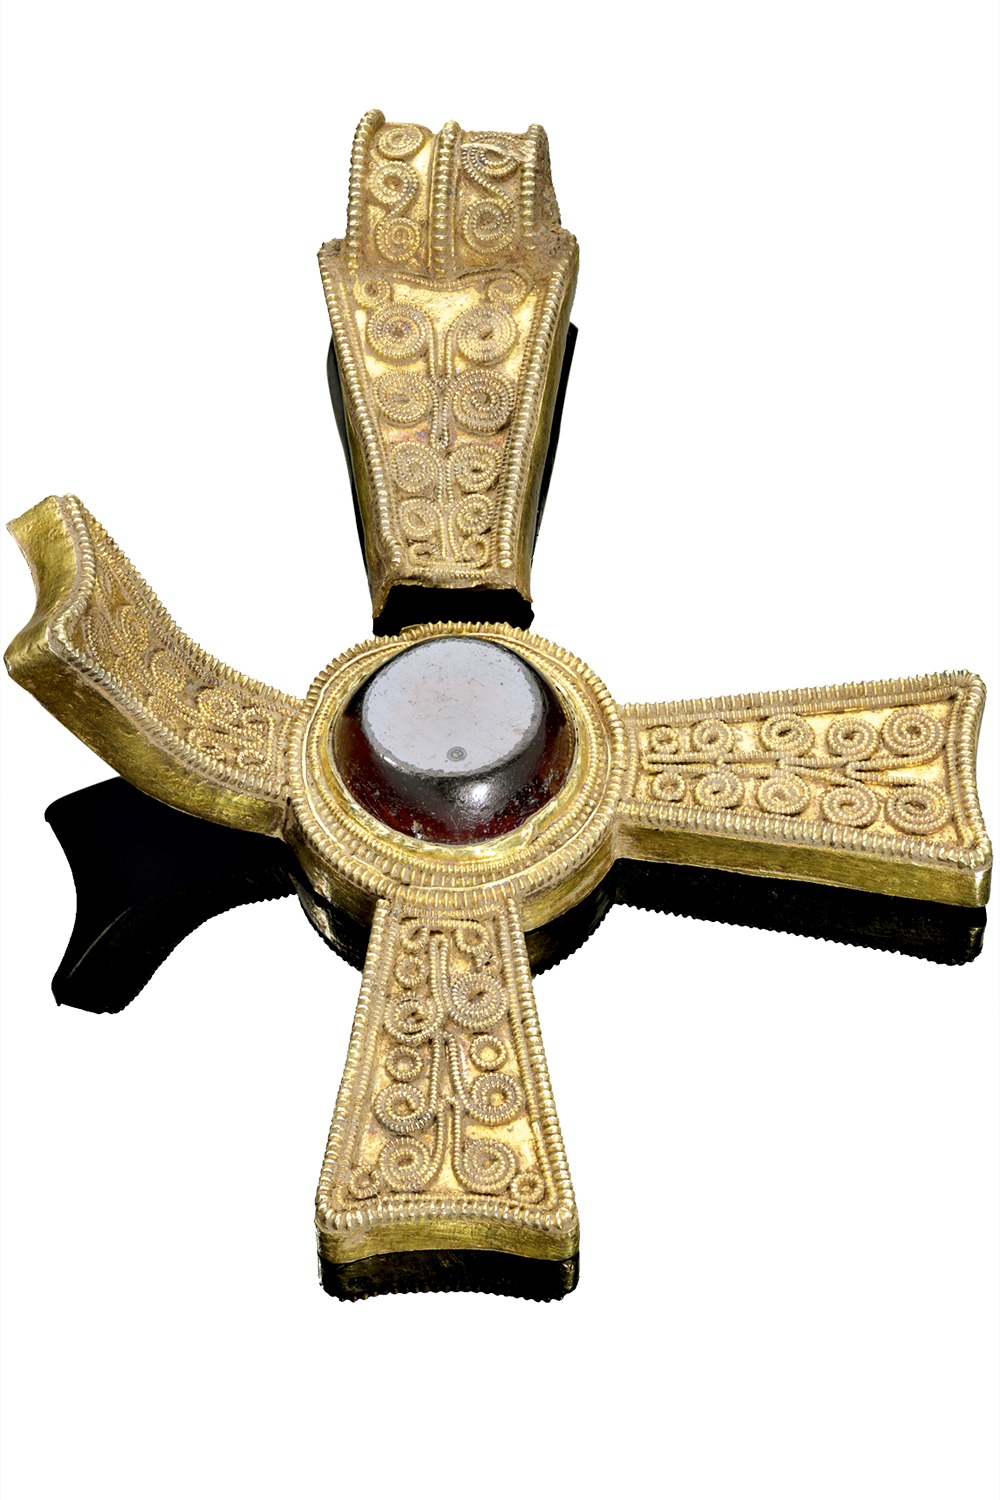 TESOURO - Crucifixo de Staffordshire: enterrado para destruir seu valor simbólico -